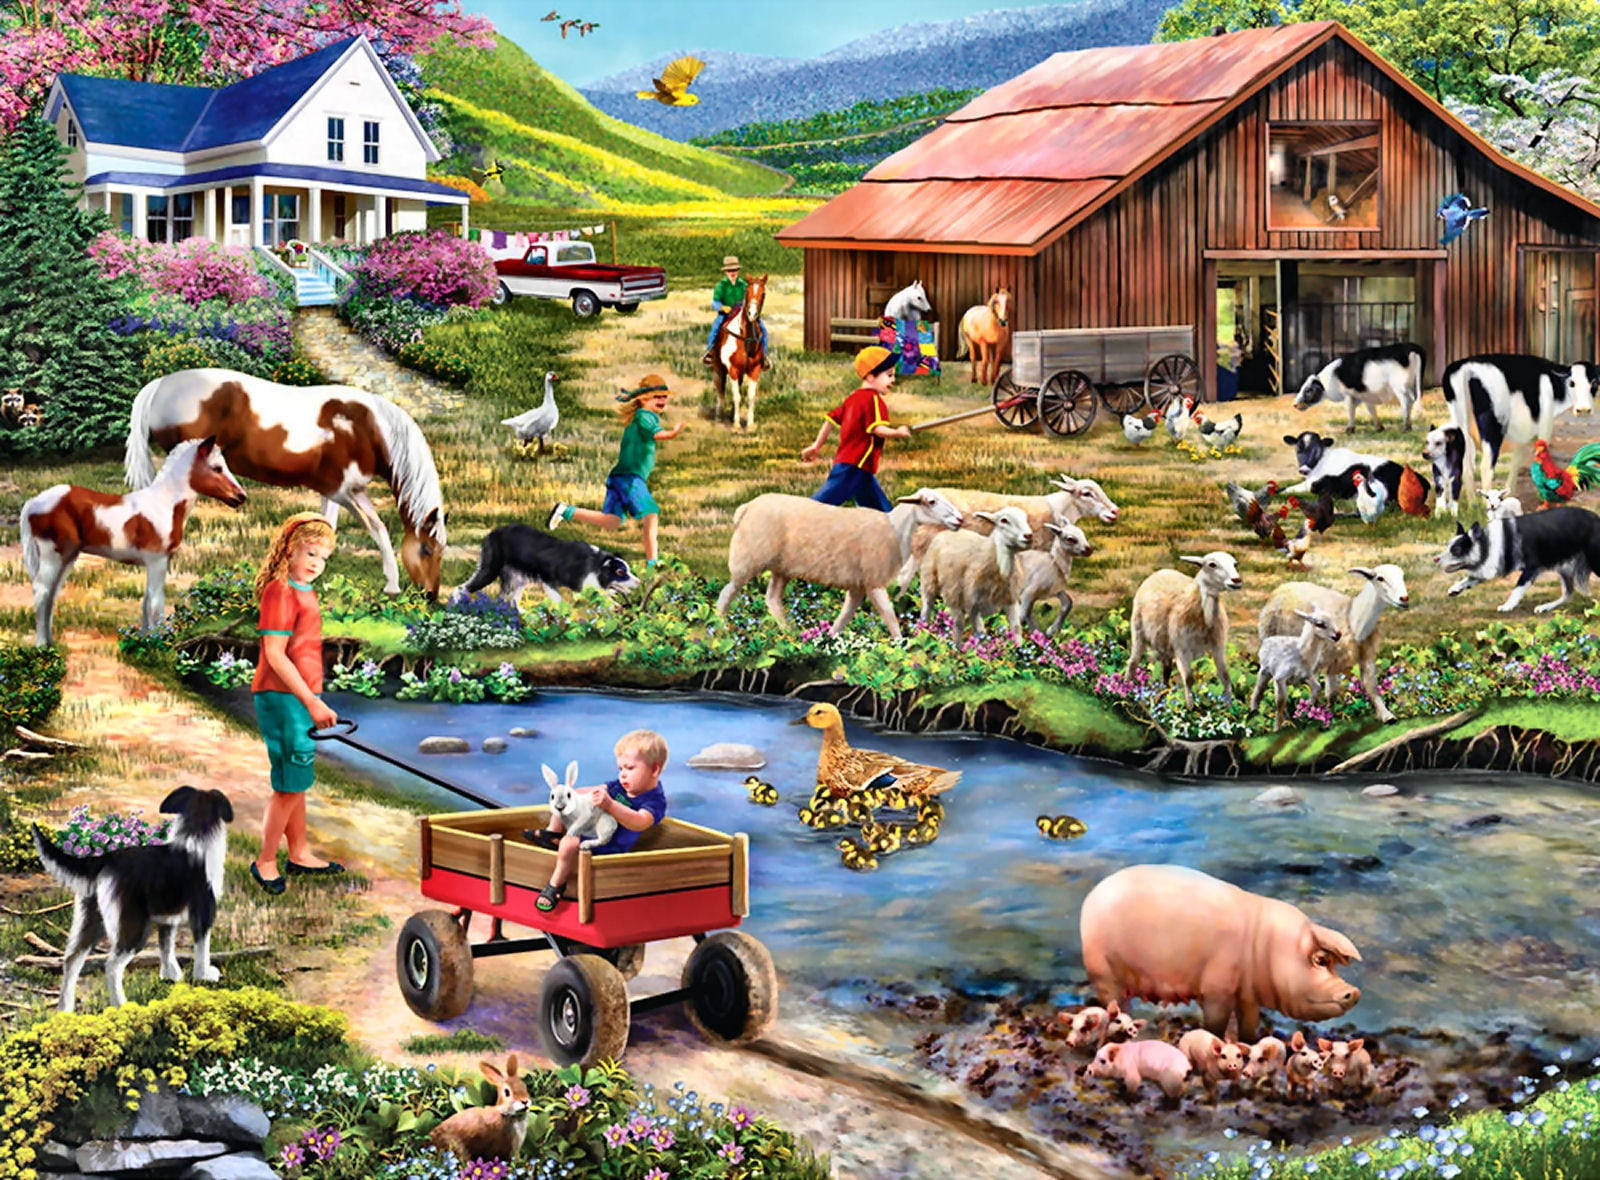 Farmhouse With Animals Near The Stream Wallpaper